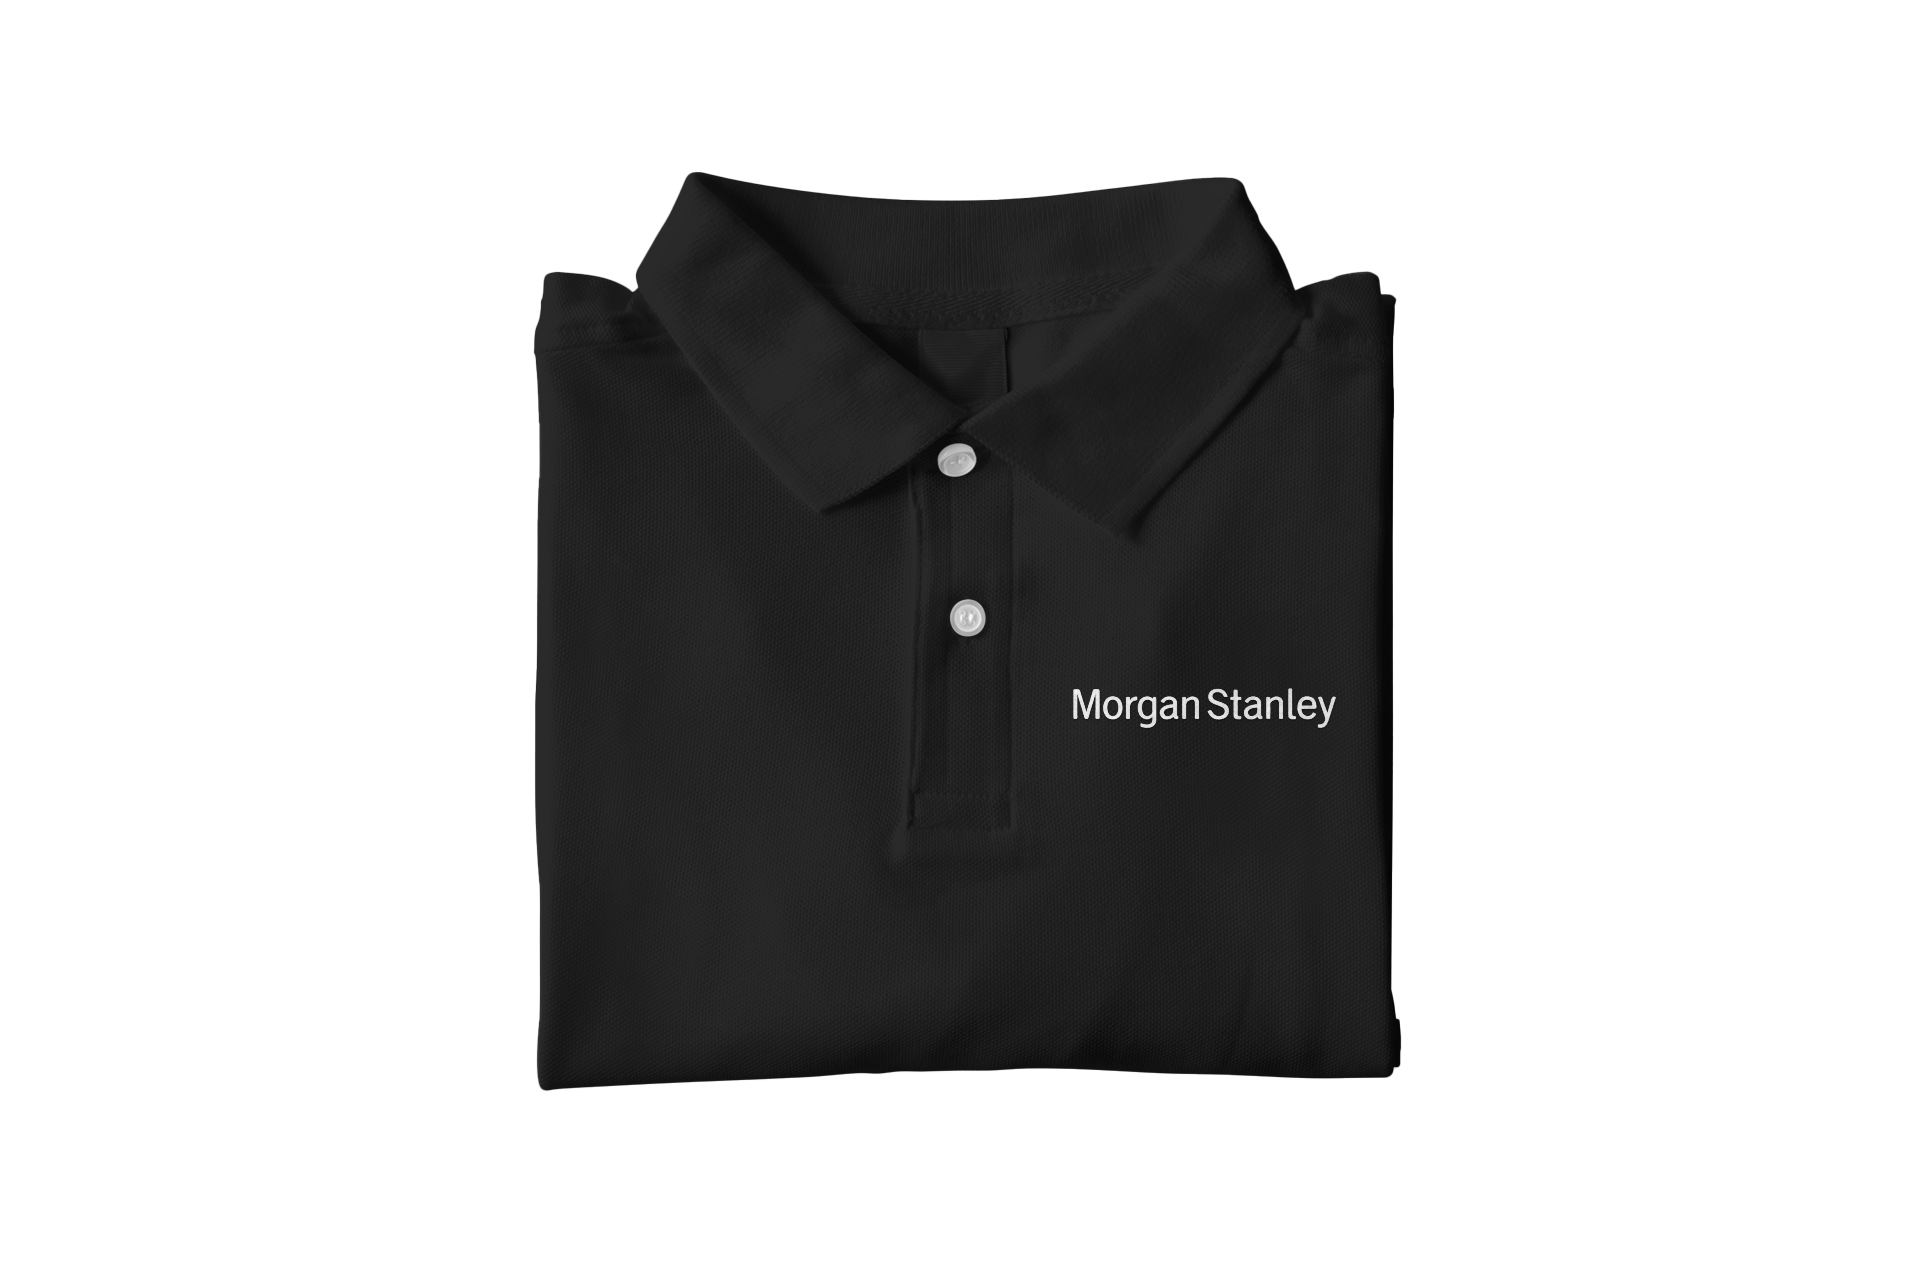 Morgan Stanley - Polo Shirt